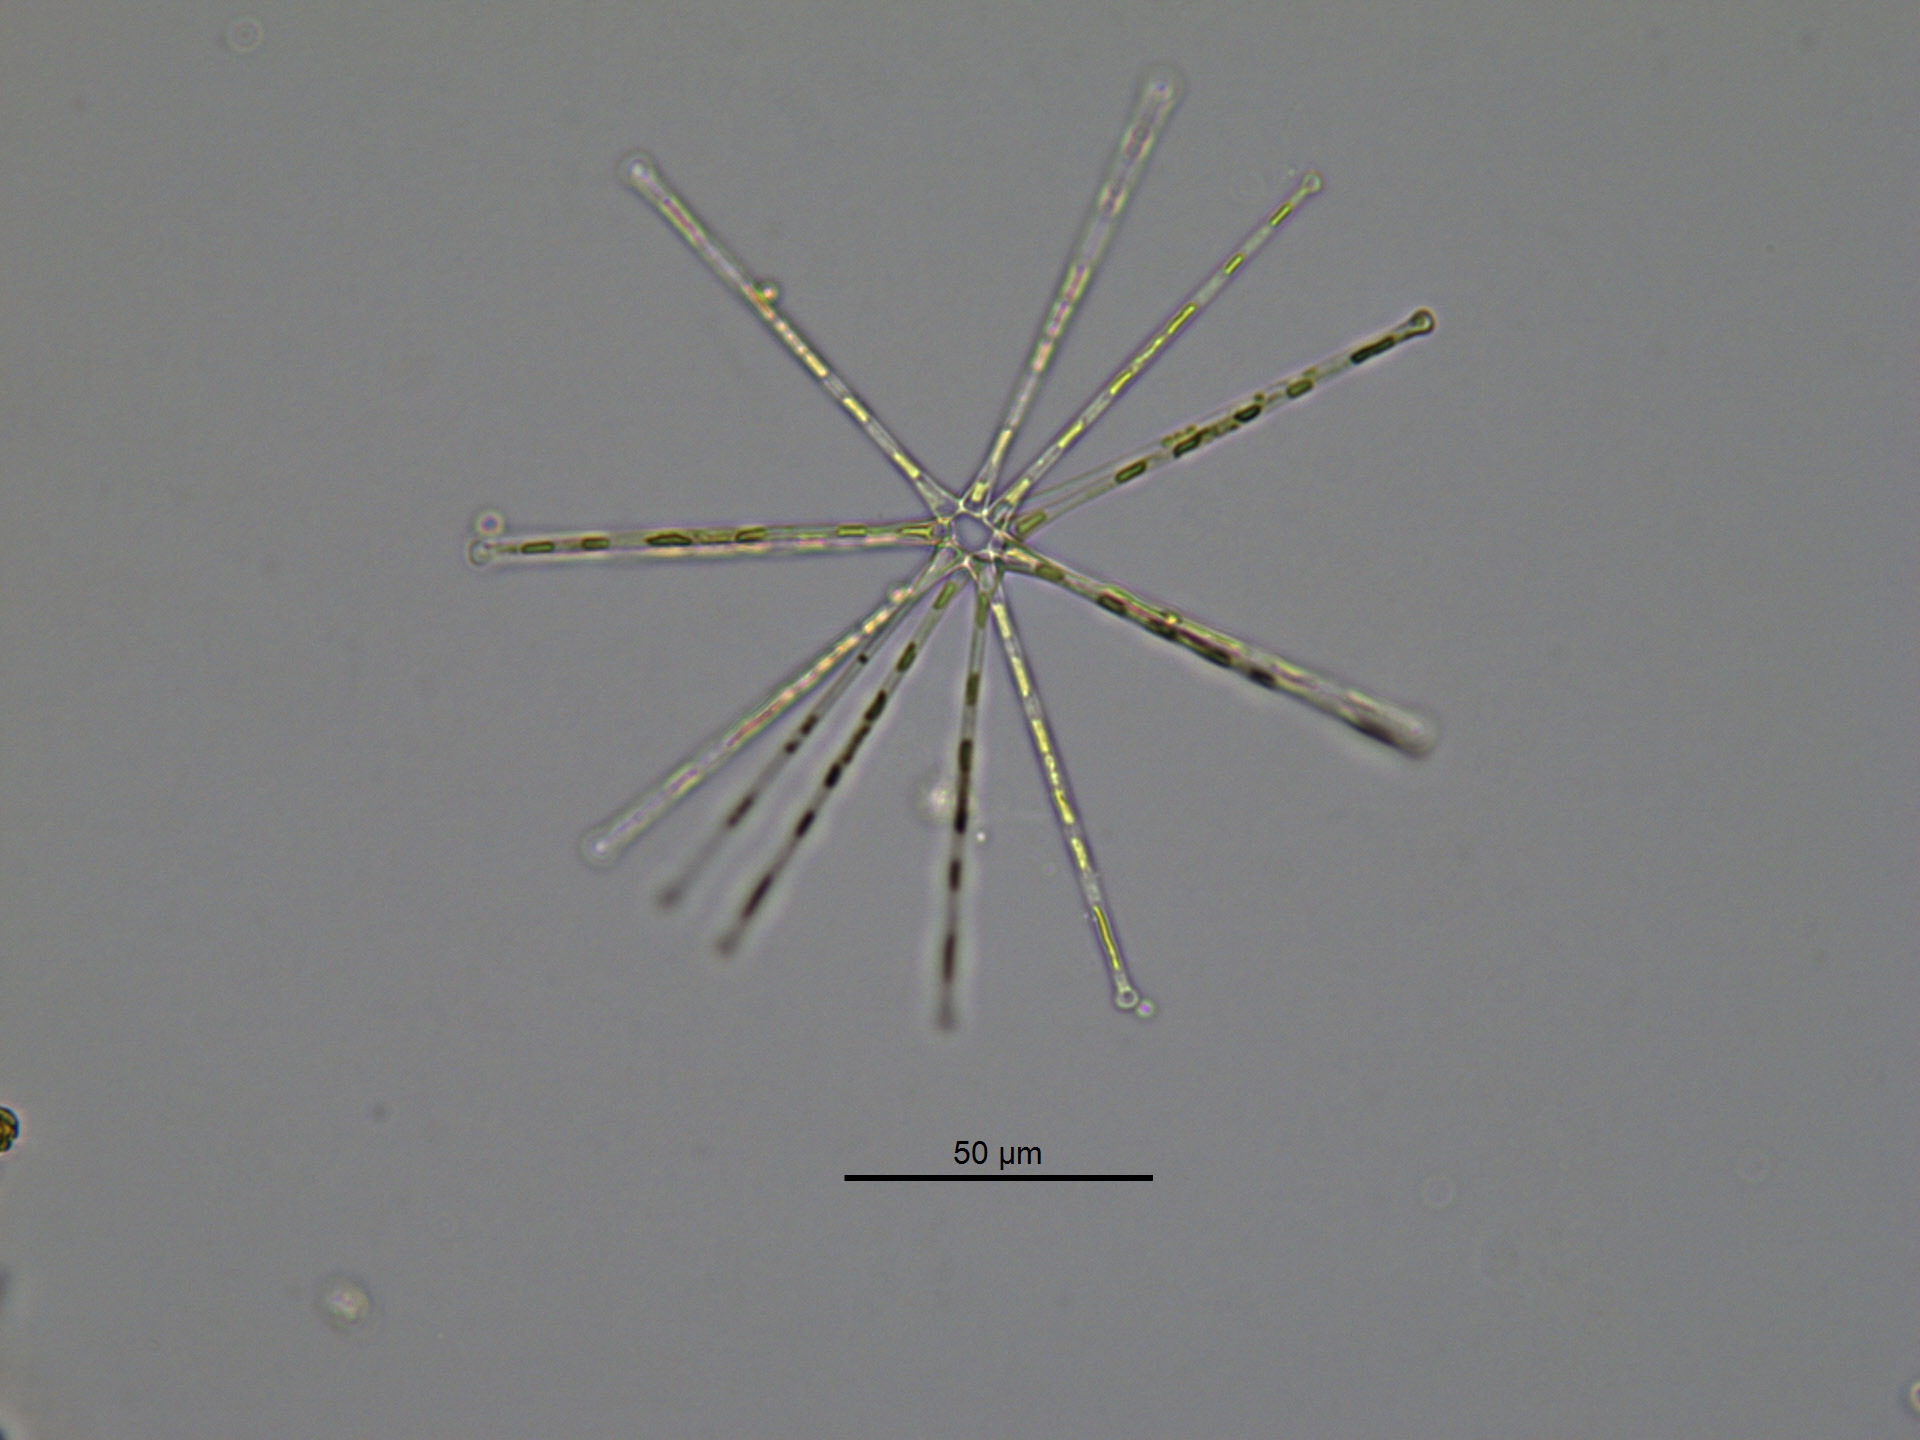 A star-shaped diatom colony